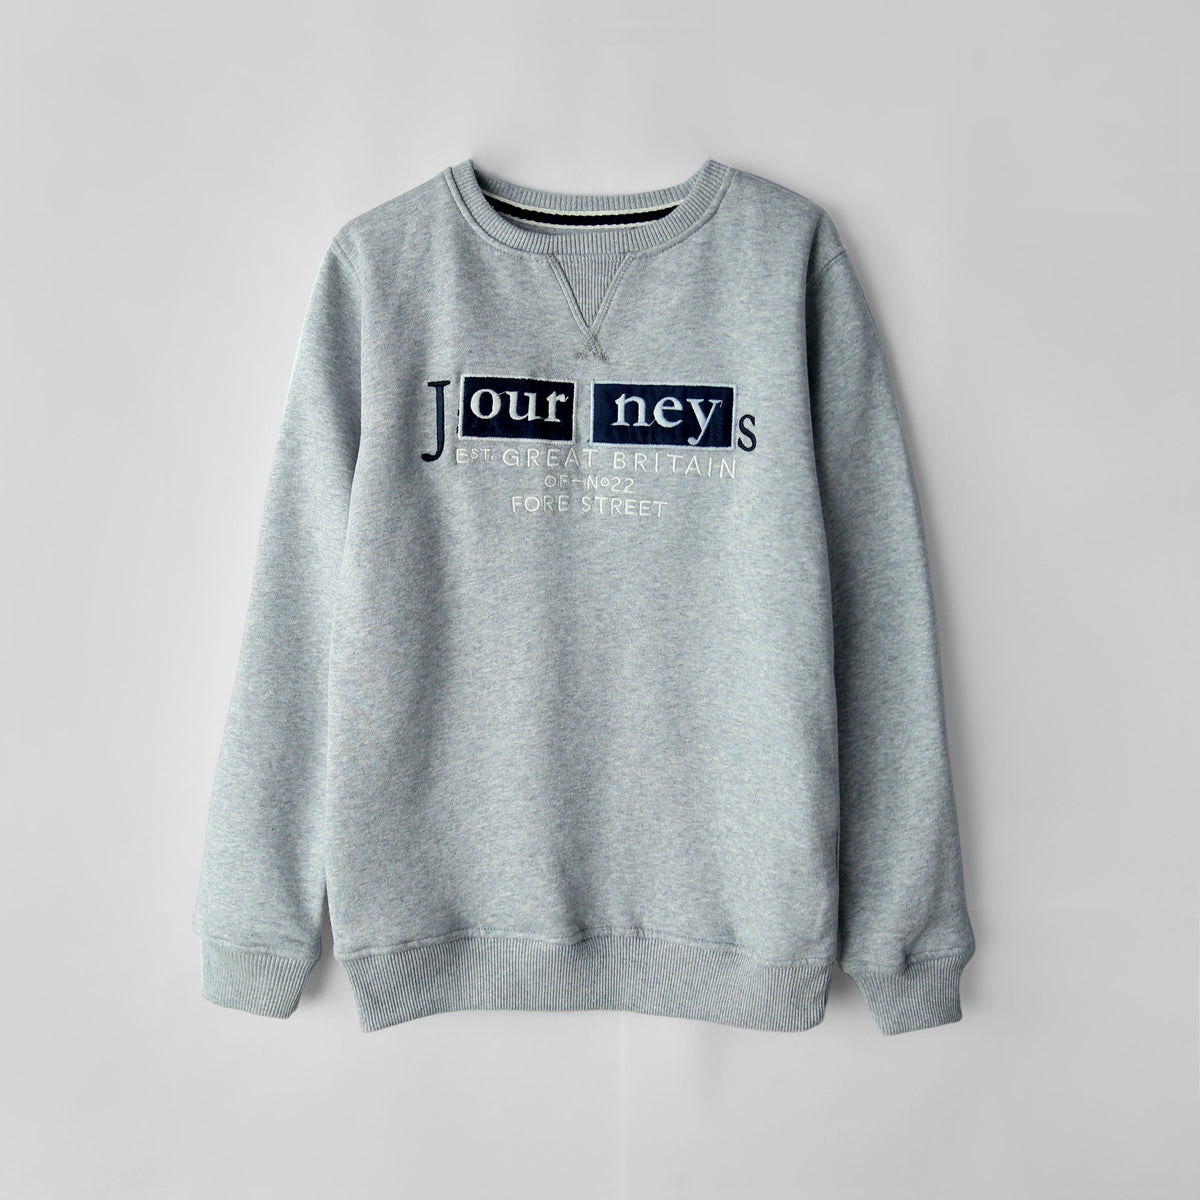 Premium Quality Embroidered Fleece Gray Sweatshirt For Kids